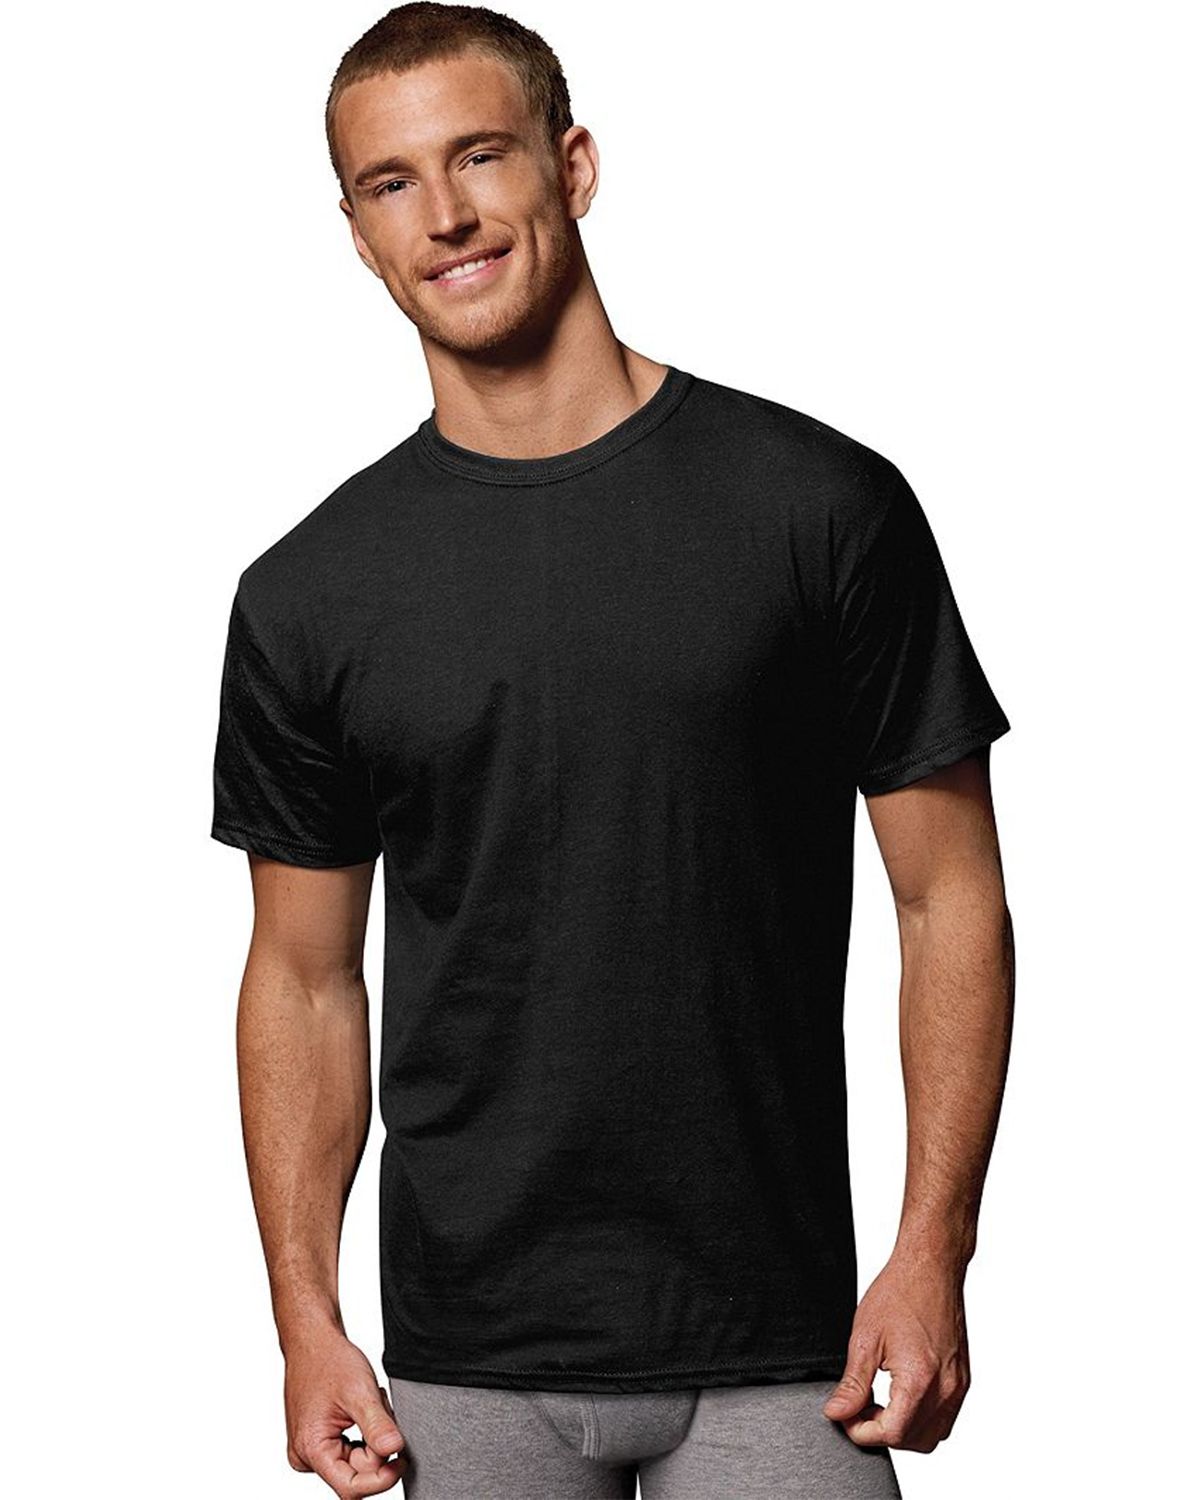 Hanes 2165T5 Men's FreshIQ ComfortSoft Dyed Black/Grey T-Shirt 5-Pack